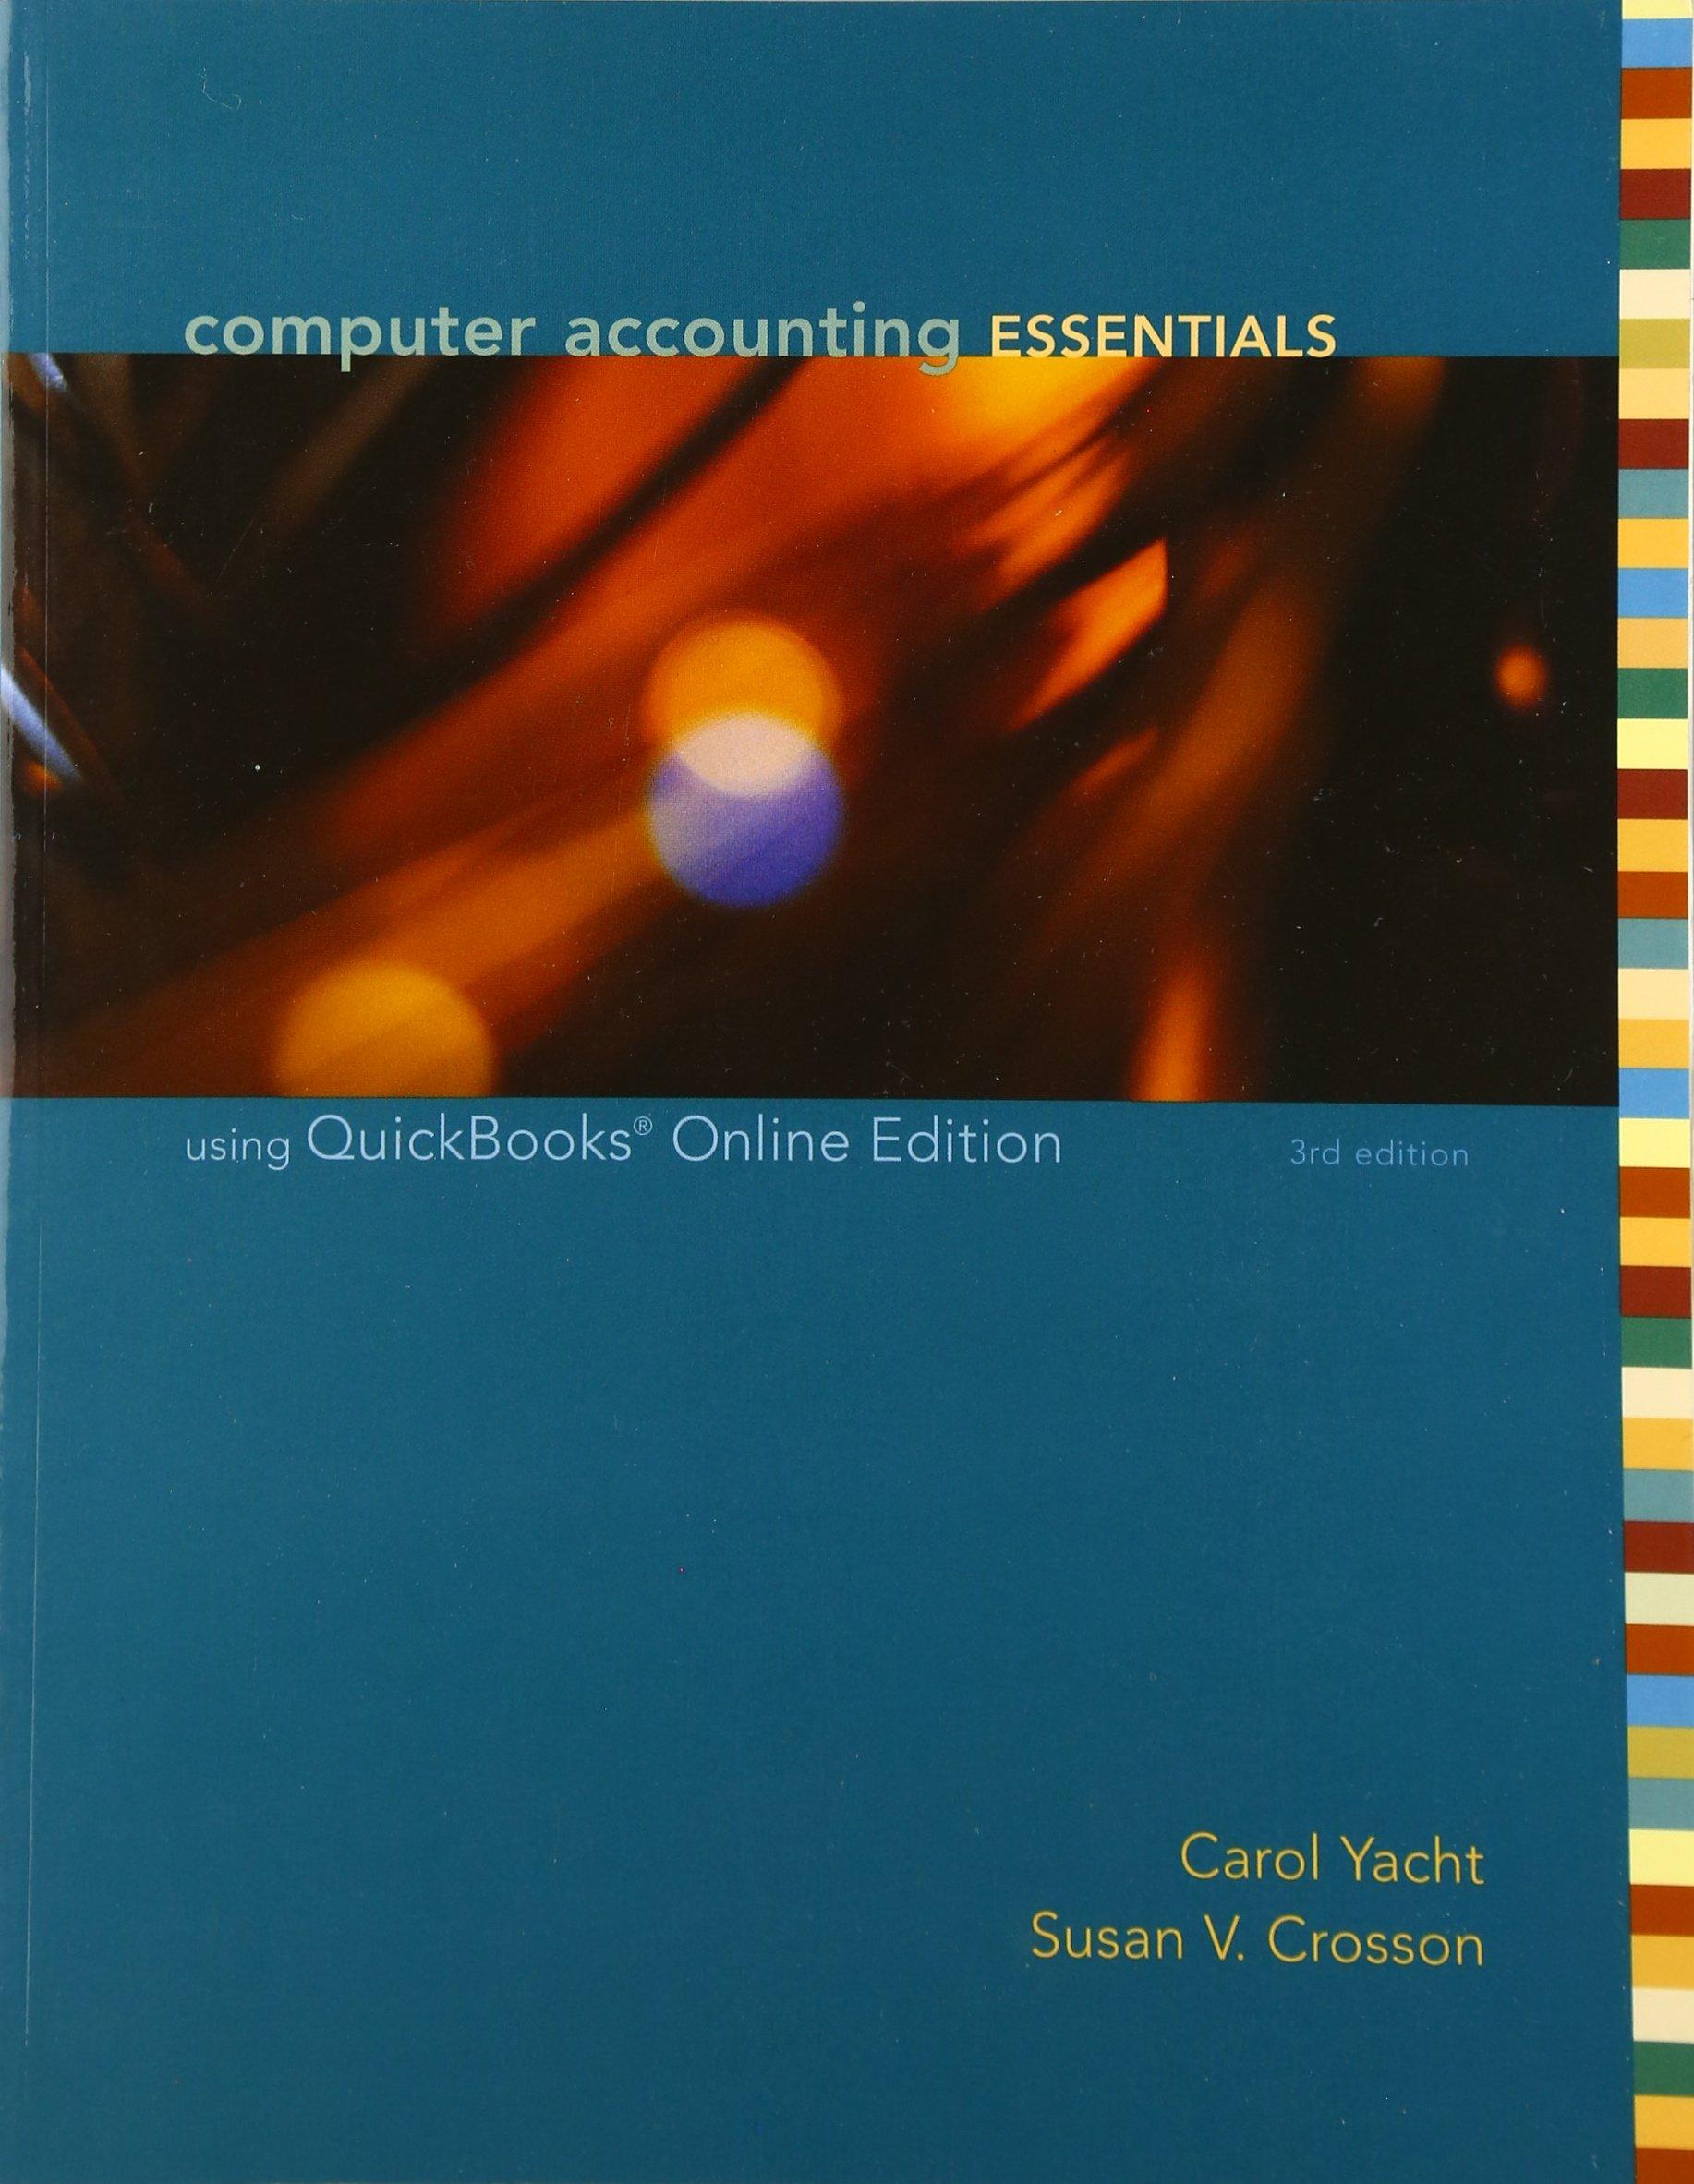 computer accounting essentials using quickbooks 3rd edition carol yacht, susan crosson 0073131121,